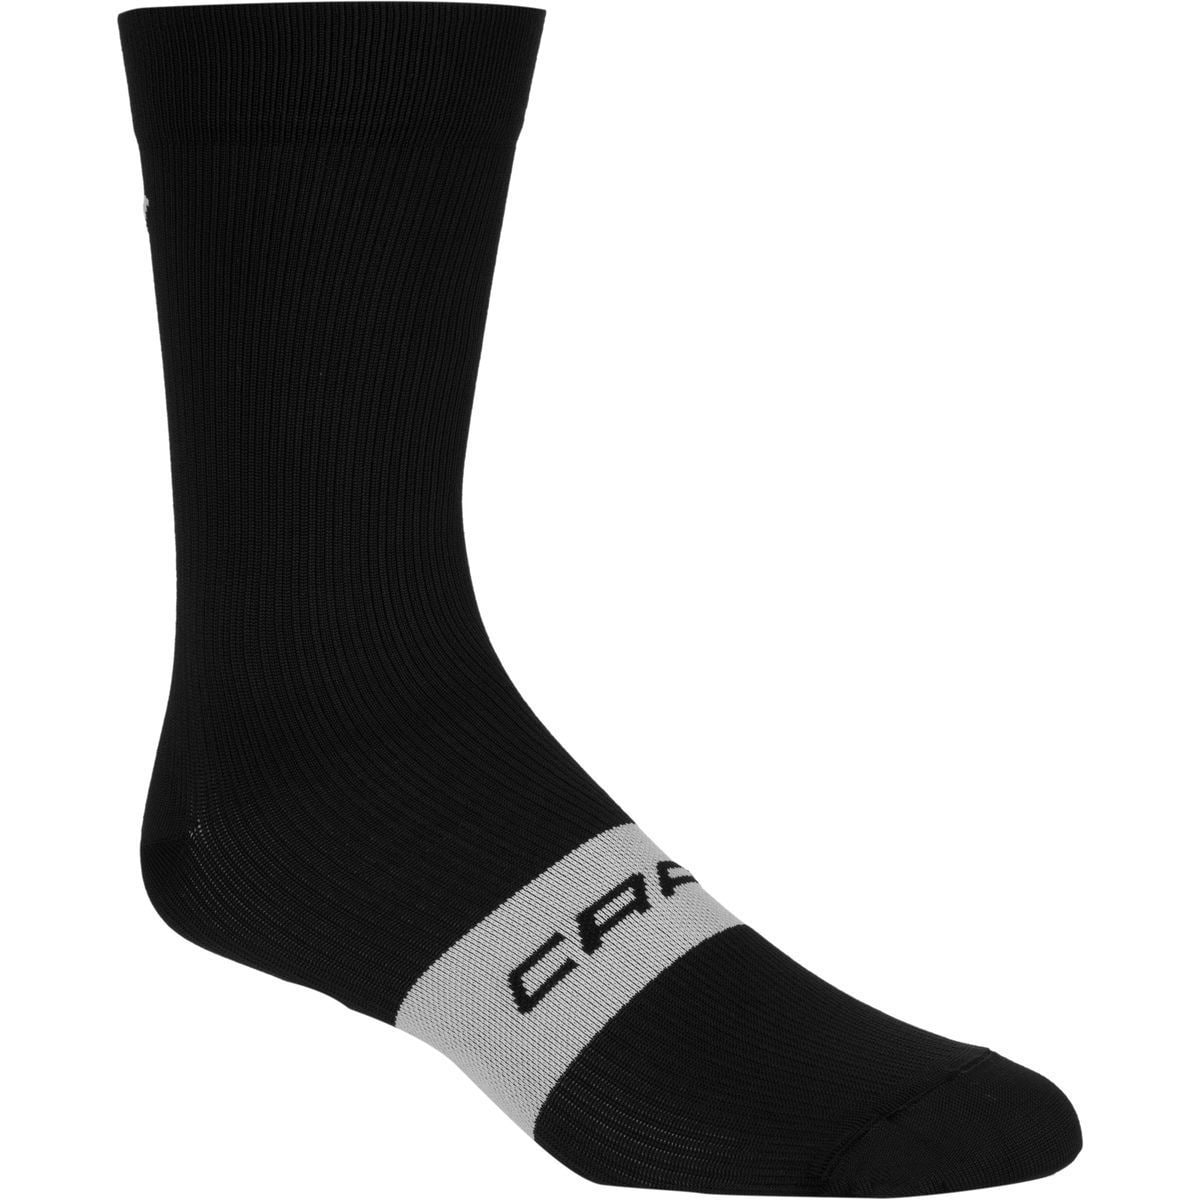 Capo Active Compression 15 Sock - Men's